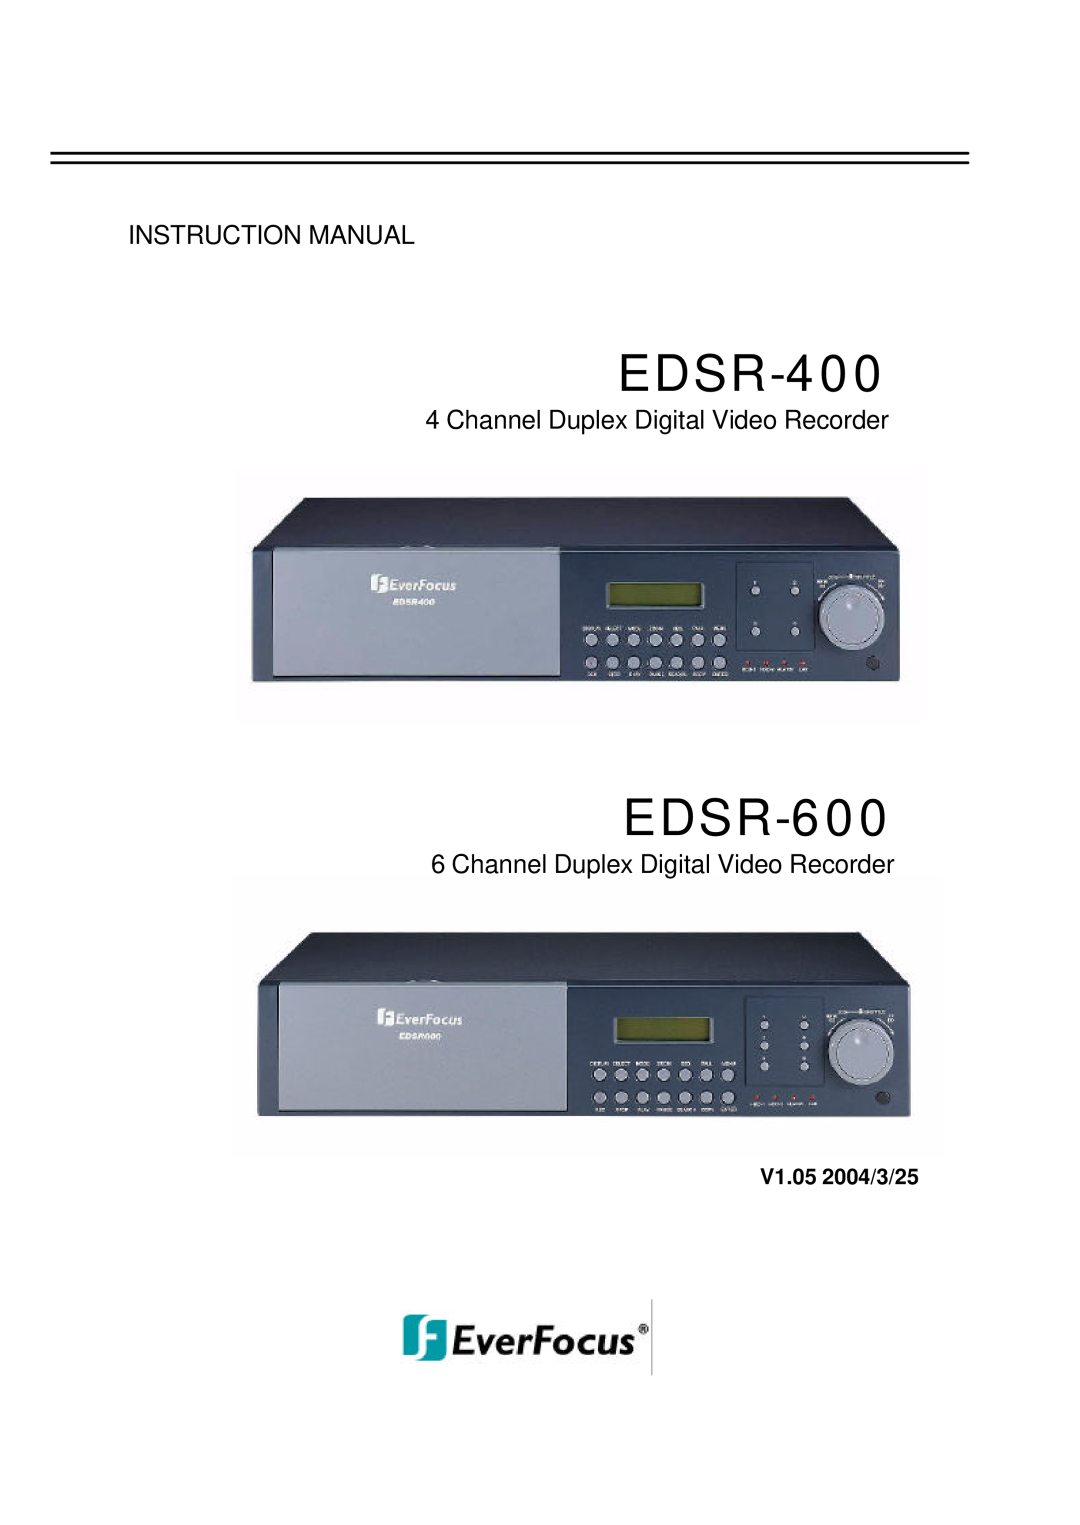 EverFocus EDSR-600 instruction manual Instruction Manual, Channel Duplex Digital Video Recorder, V1.05 2004/3/25, EDSR-400 